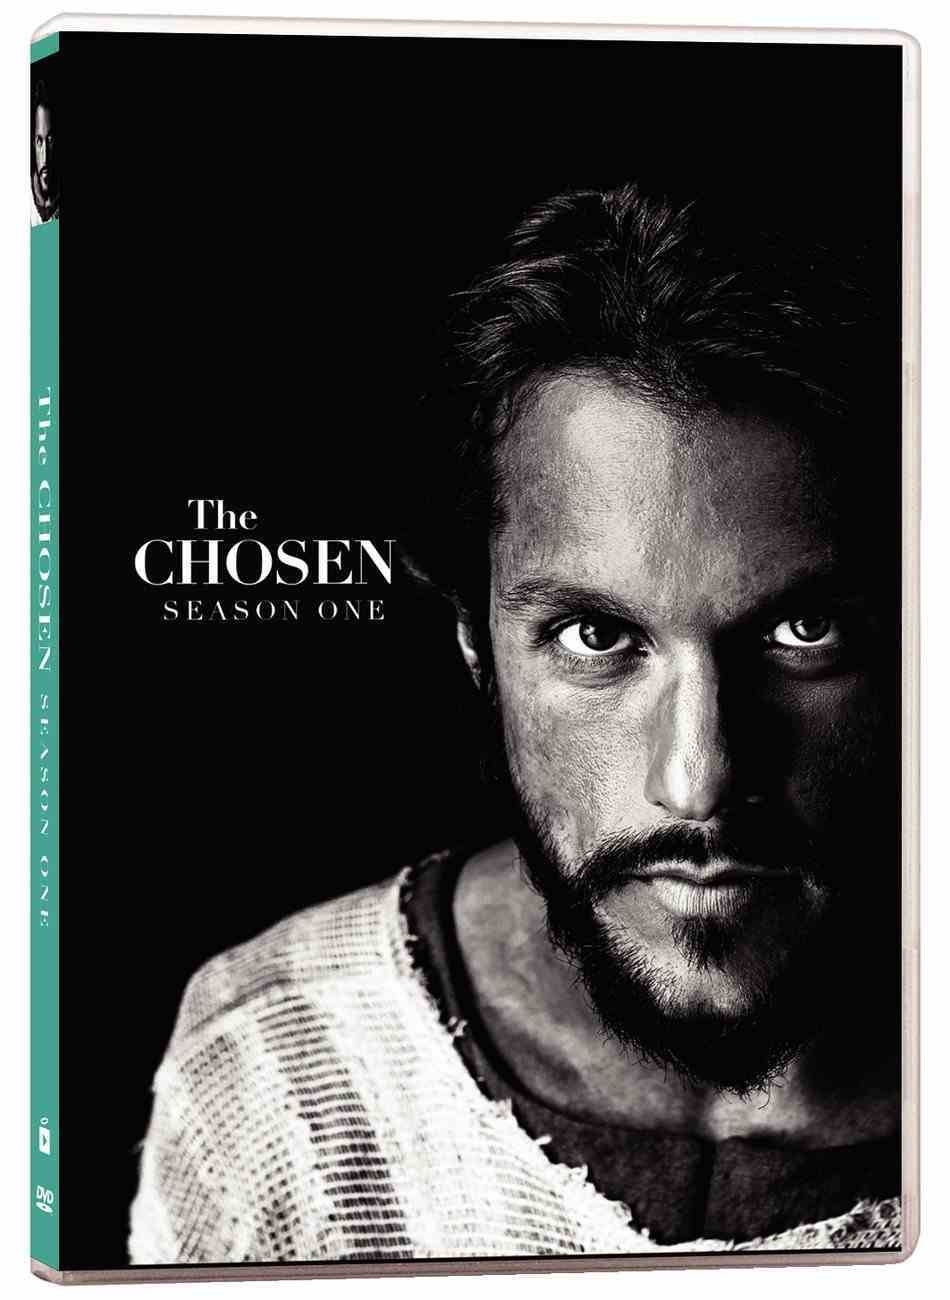 The Chosen: Season 1 (2 DVDS) (The Chosen Series) DVD